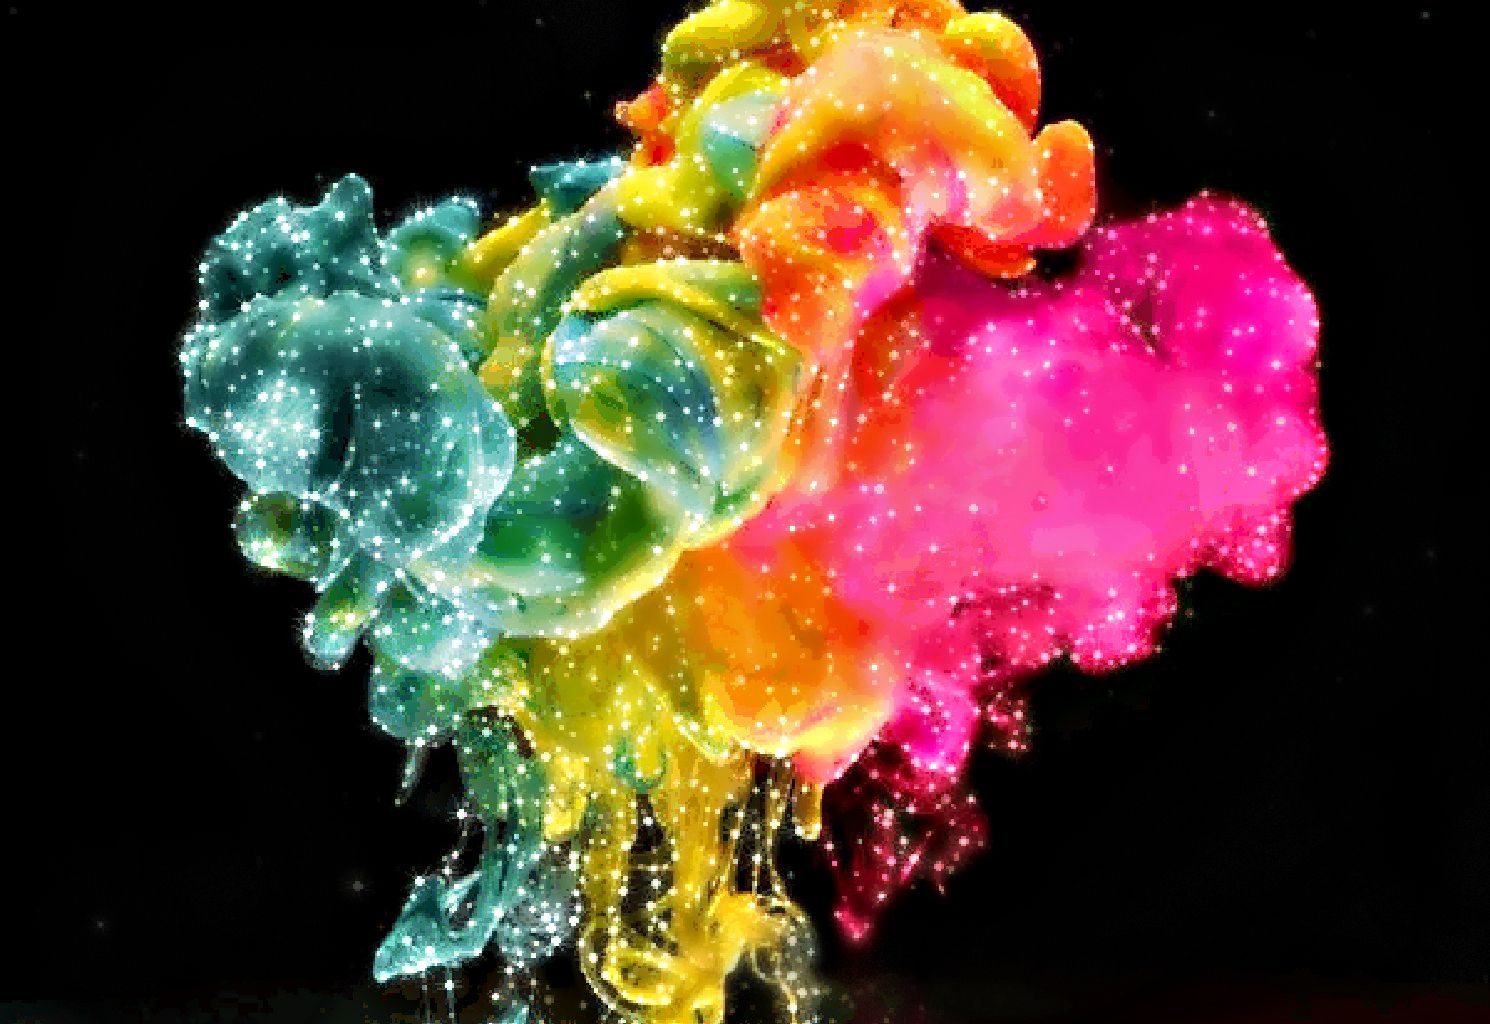 45+] Color Explosion Wallpaper